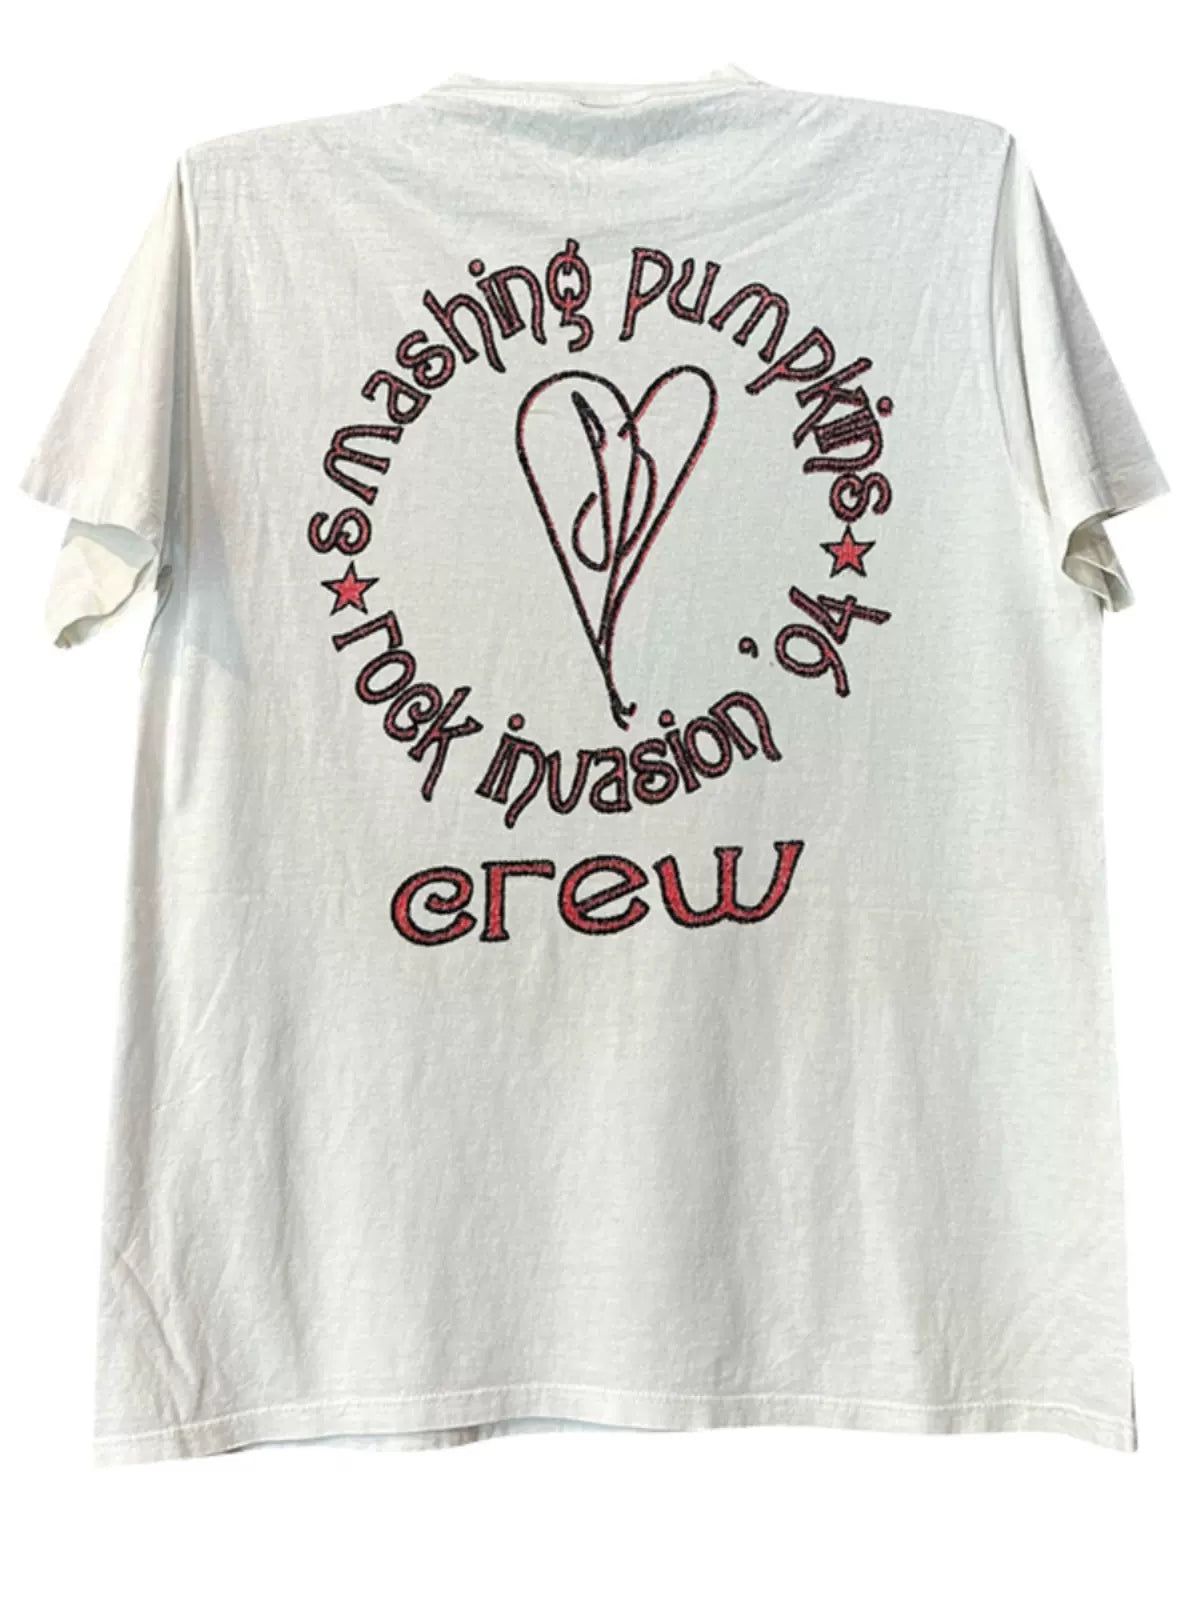 Vintage Sm@shing Pumpkins Crew T-Shirt